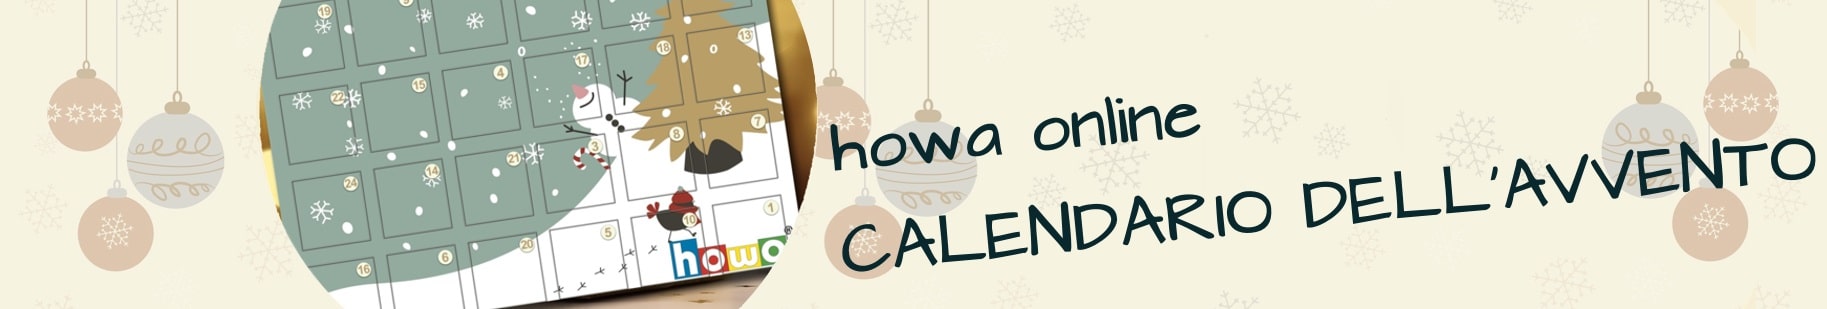 howa Online Calendario dell'avvento